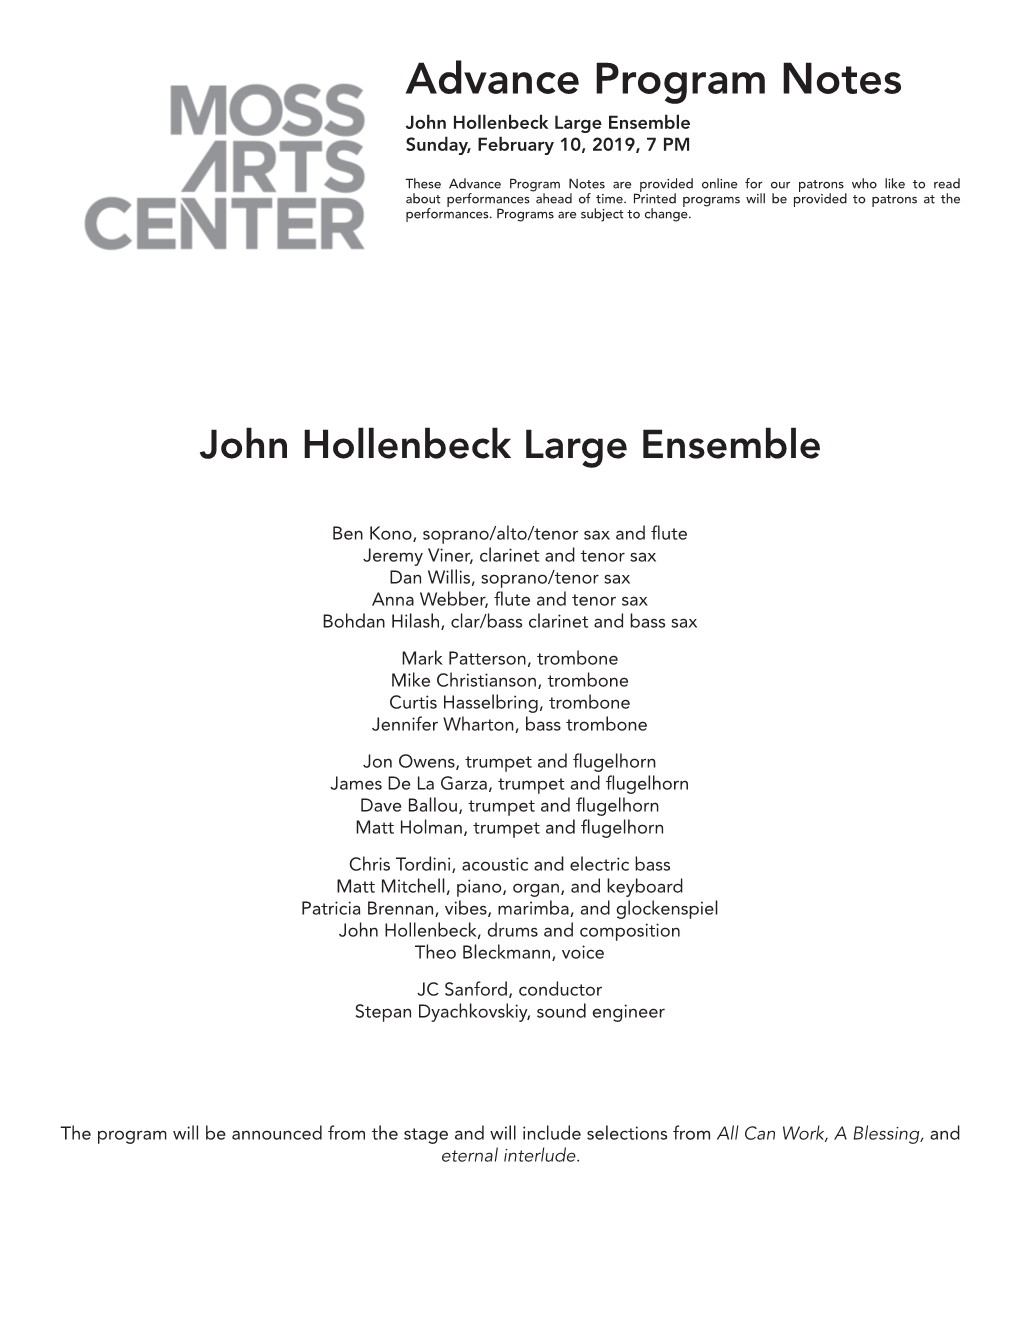 Advance Program Notes John Hollenbeck Large Ensemble Sunday, February 10, 2019, 7 PM